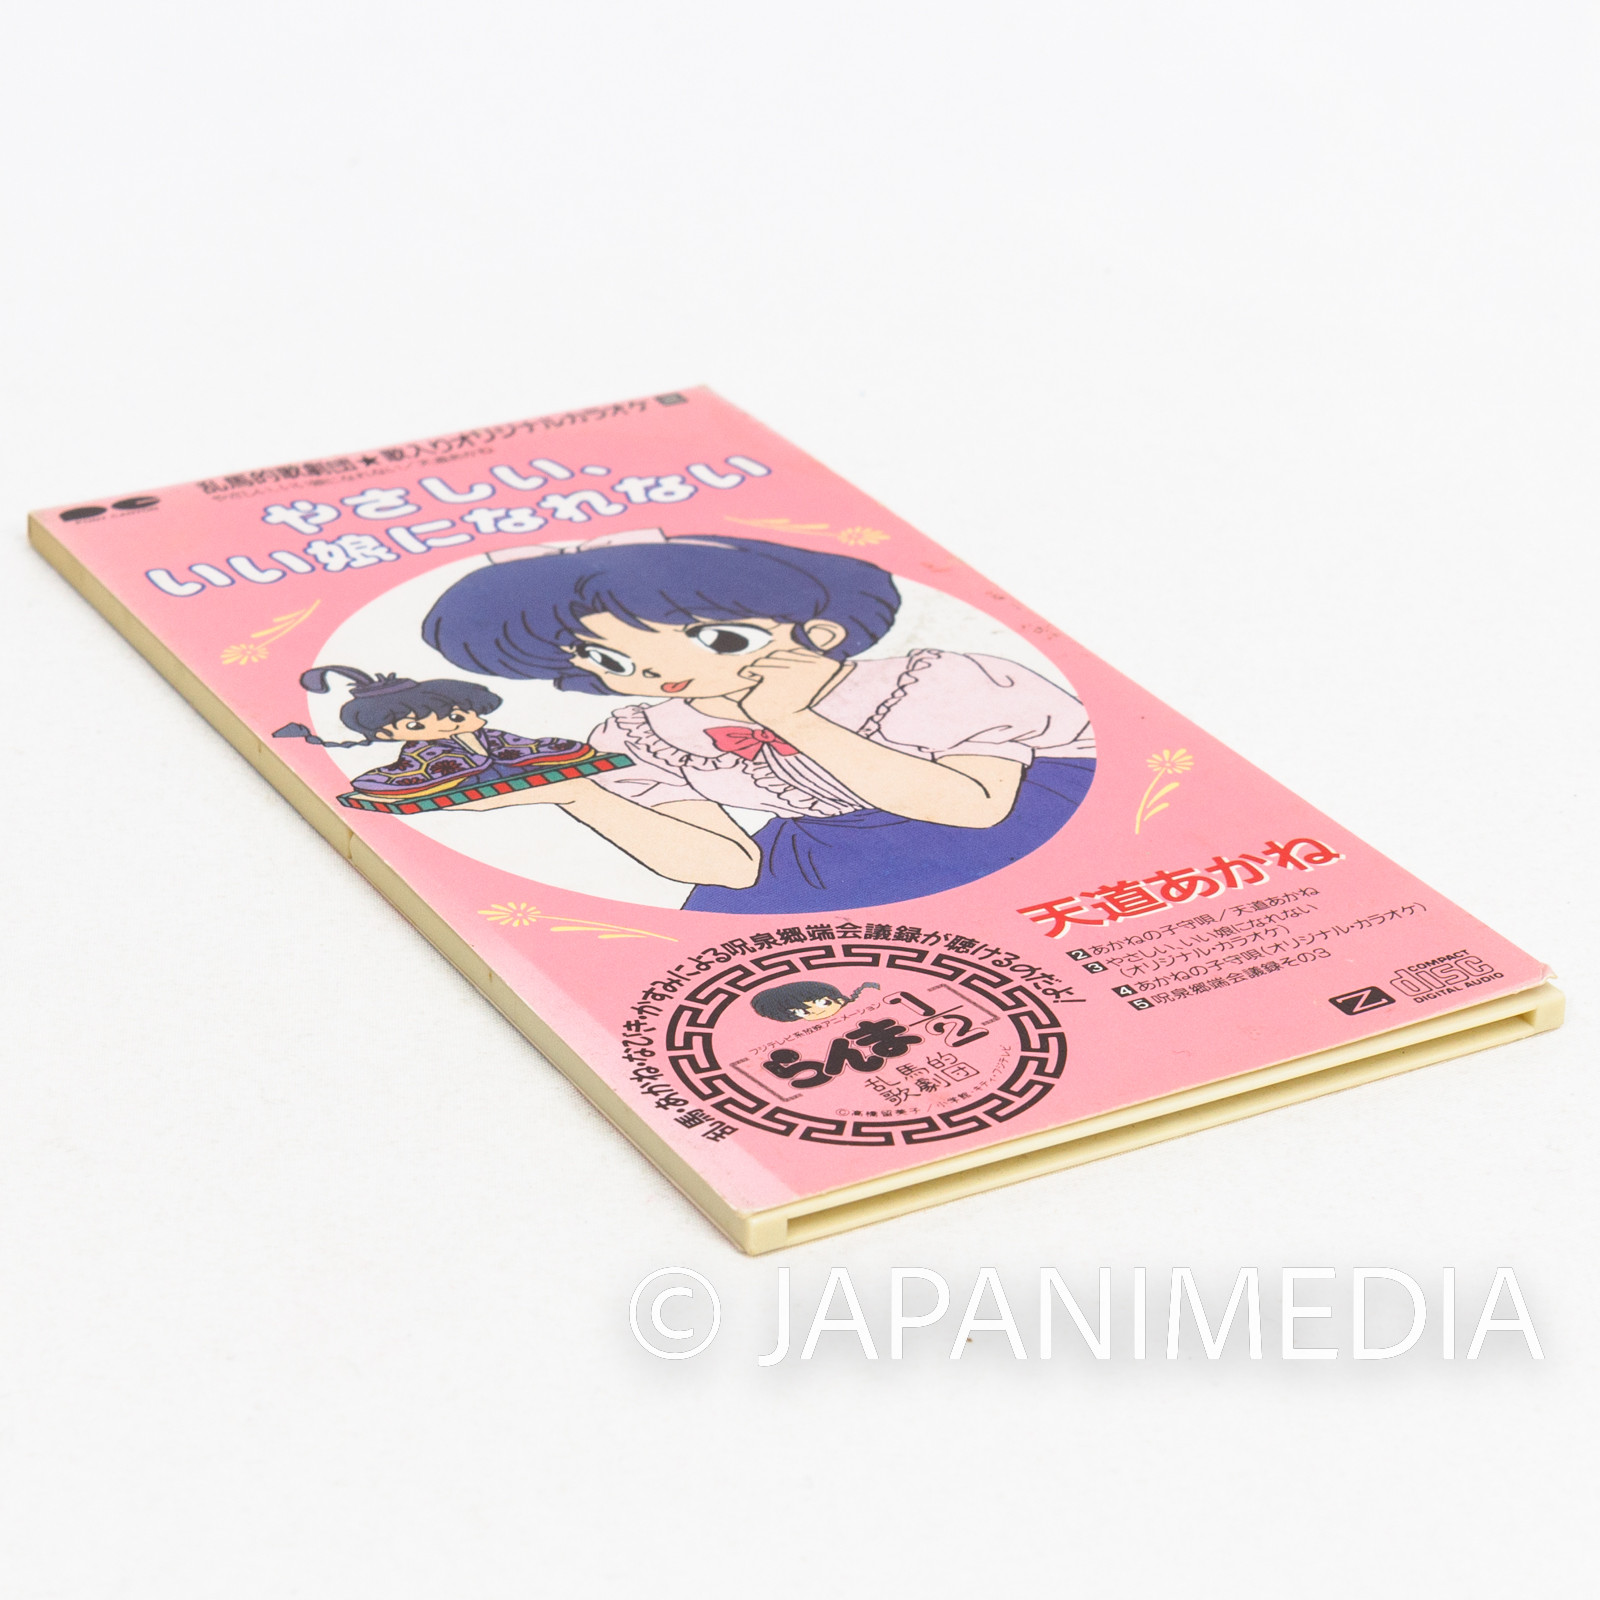 Ranma 1/2 "Yasashii Iikoninarenai Akane Tendo" Japan 3 Inch (8cm) Single JAPAN CD ANIME